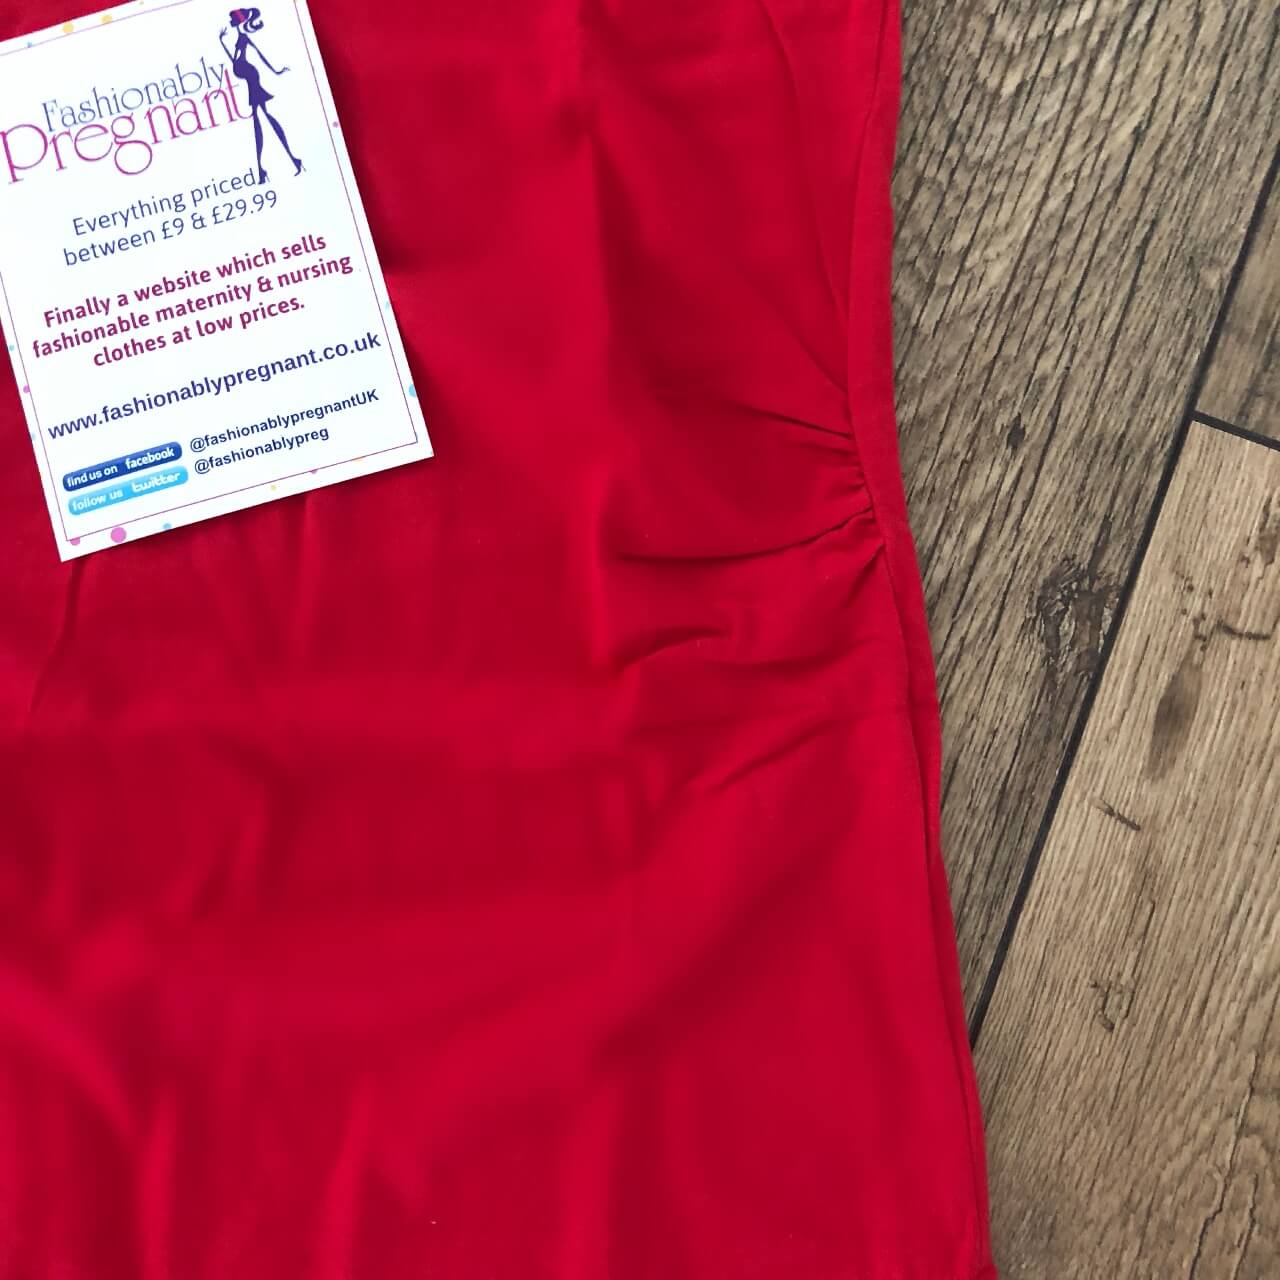 Sleeveless tank top vest Fashionably Pregnant Short Sleeve Maternity & Breastfeeding Jersey Top - Red Tshirt, basic summer